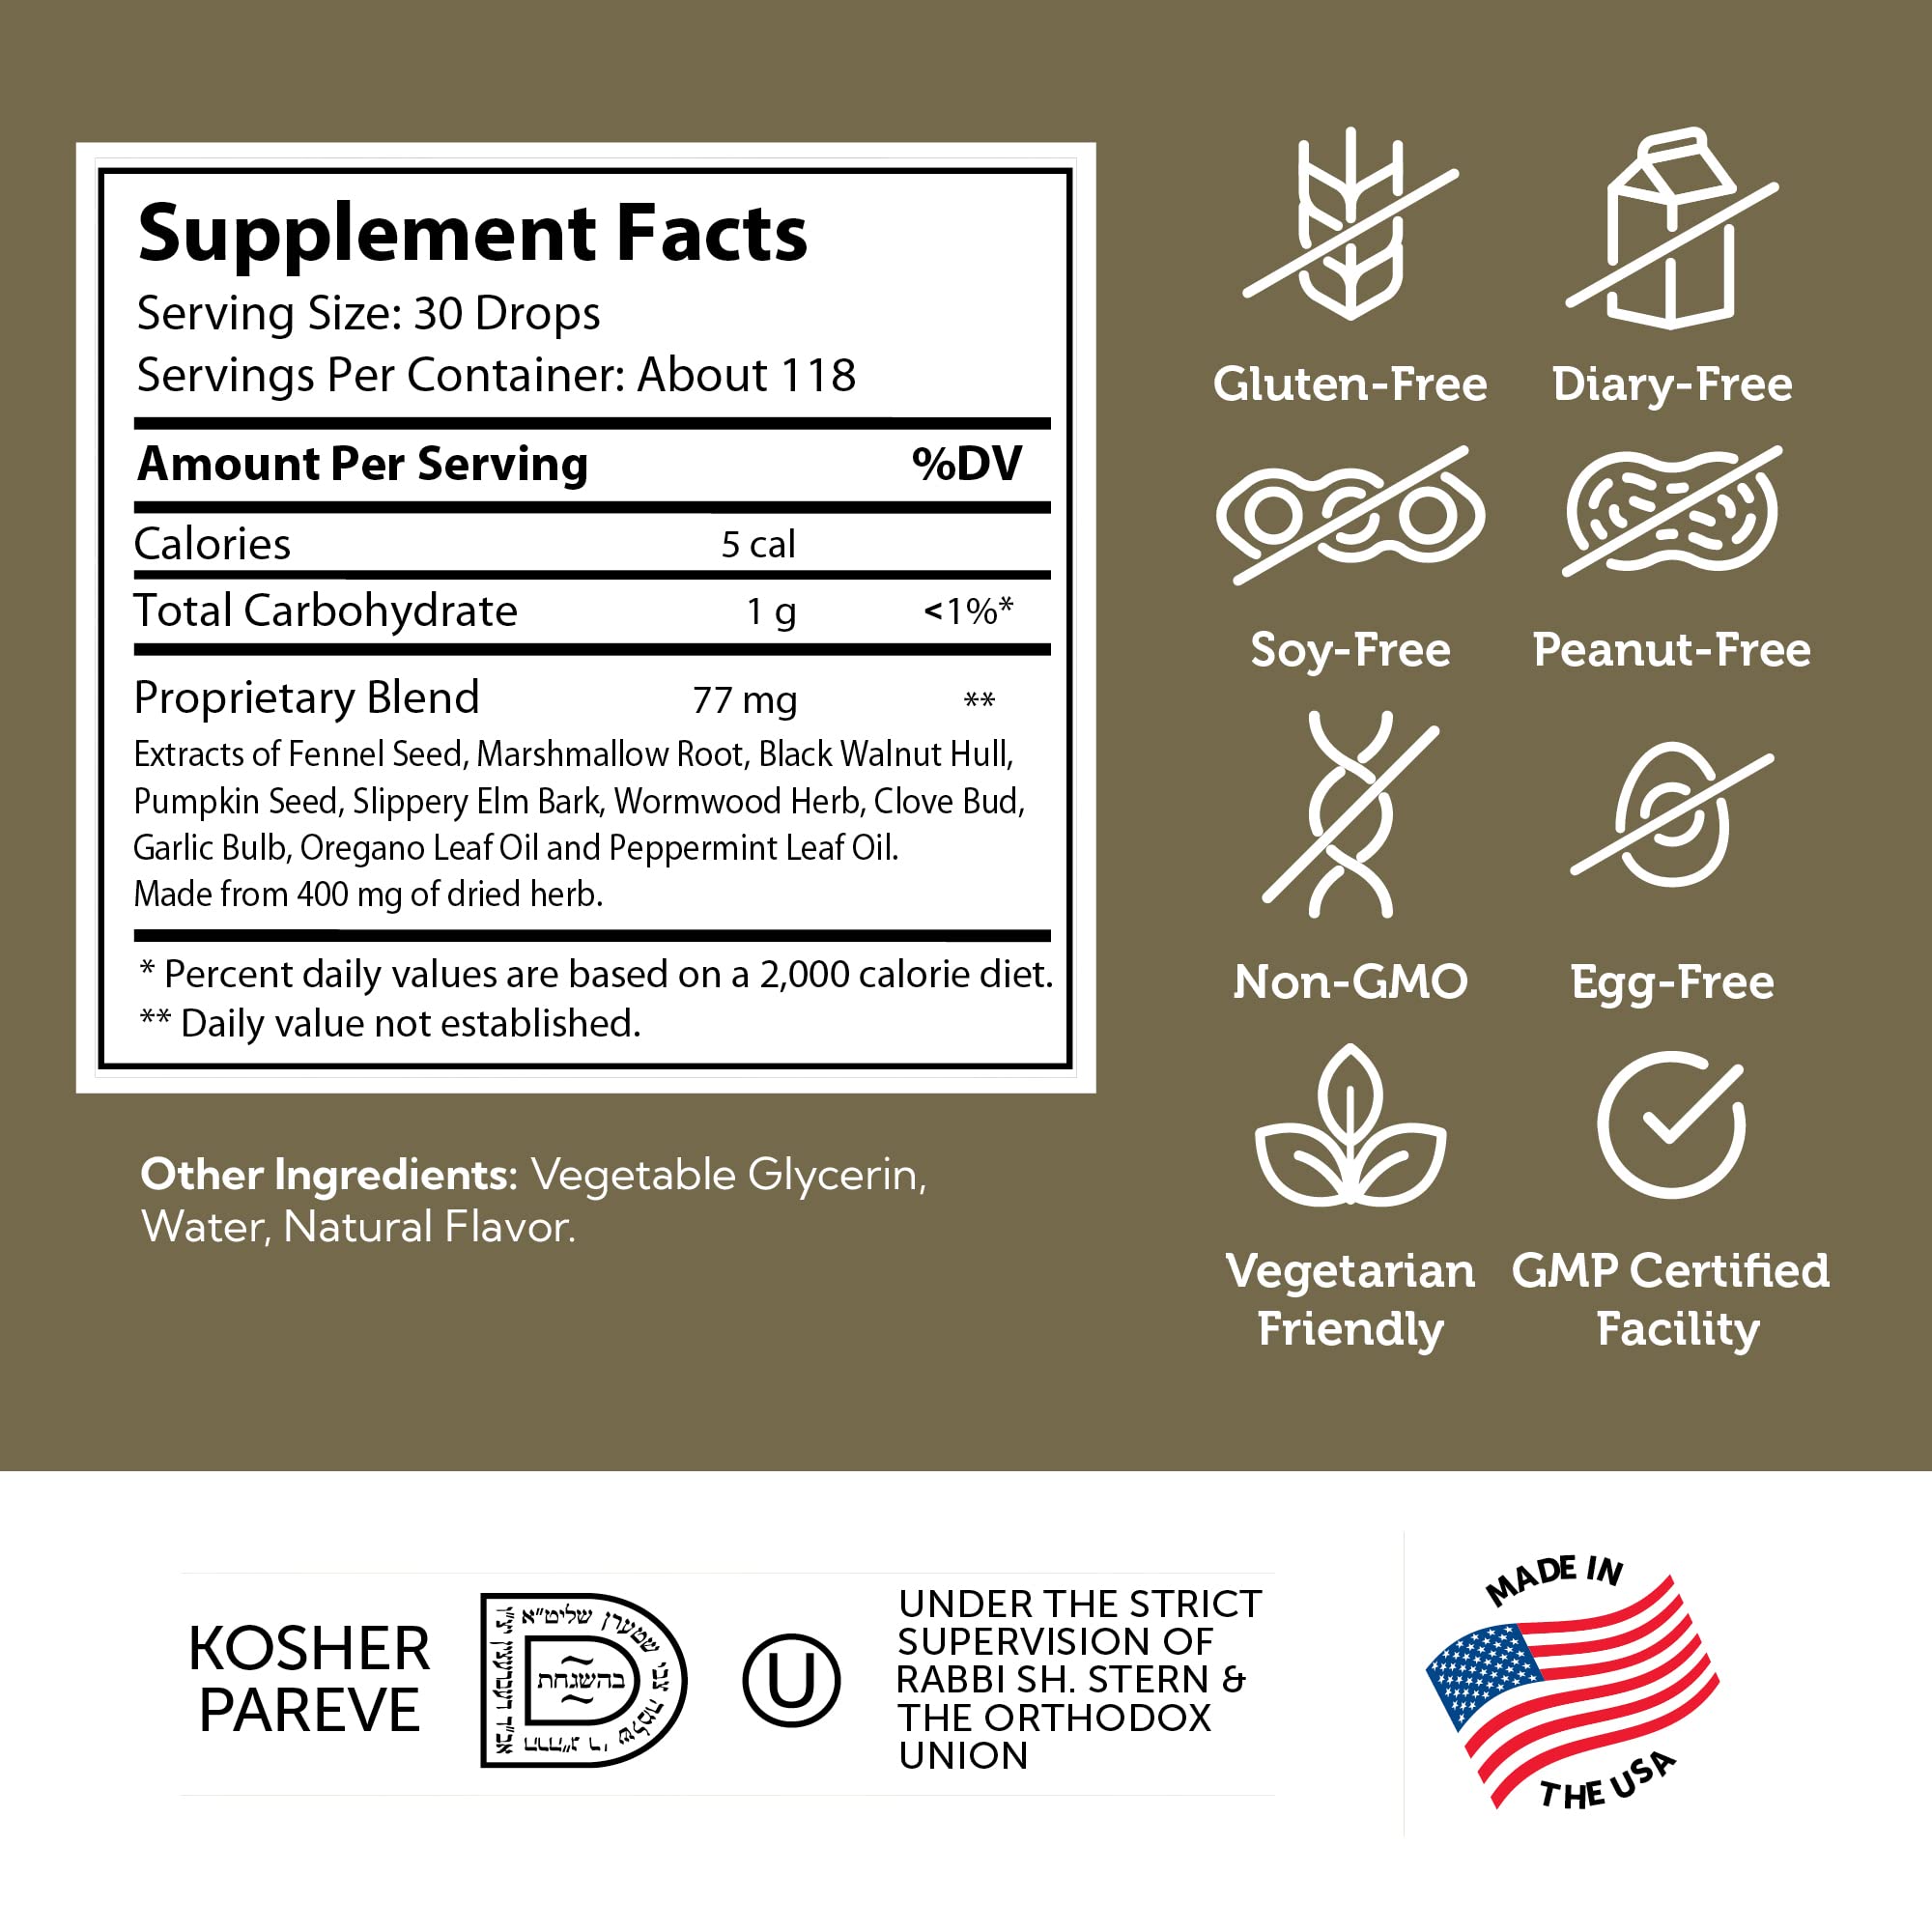 Zahler - ParaGuard Cleanse Liquid Drops - Gut Health Detox Supplement - Formula has Wormwood, Garlic Bulb, Pumpkin Seed, Clove & More - Natural Cleanse Detox for Humans - Certified Kosher (4 Oz)